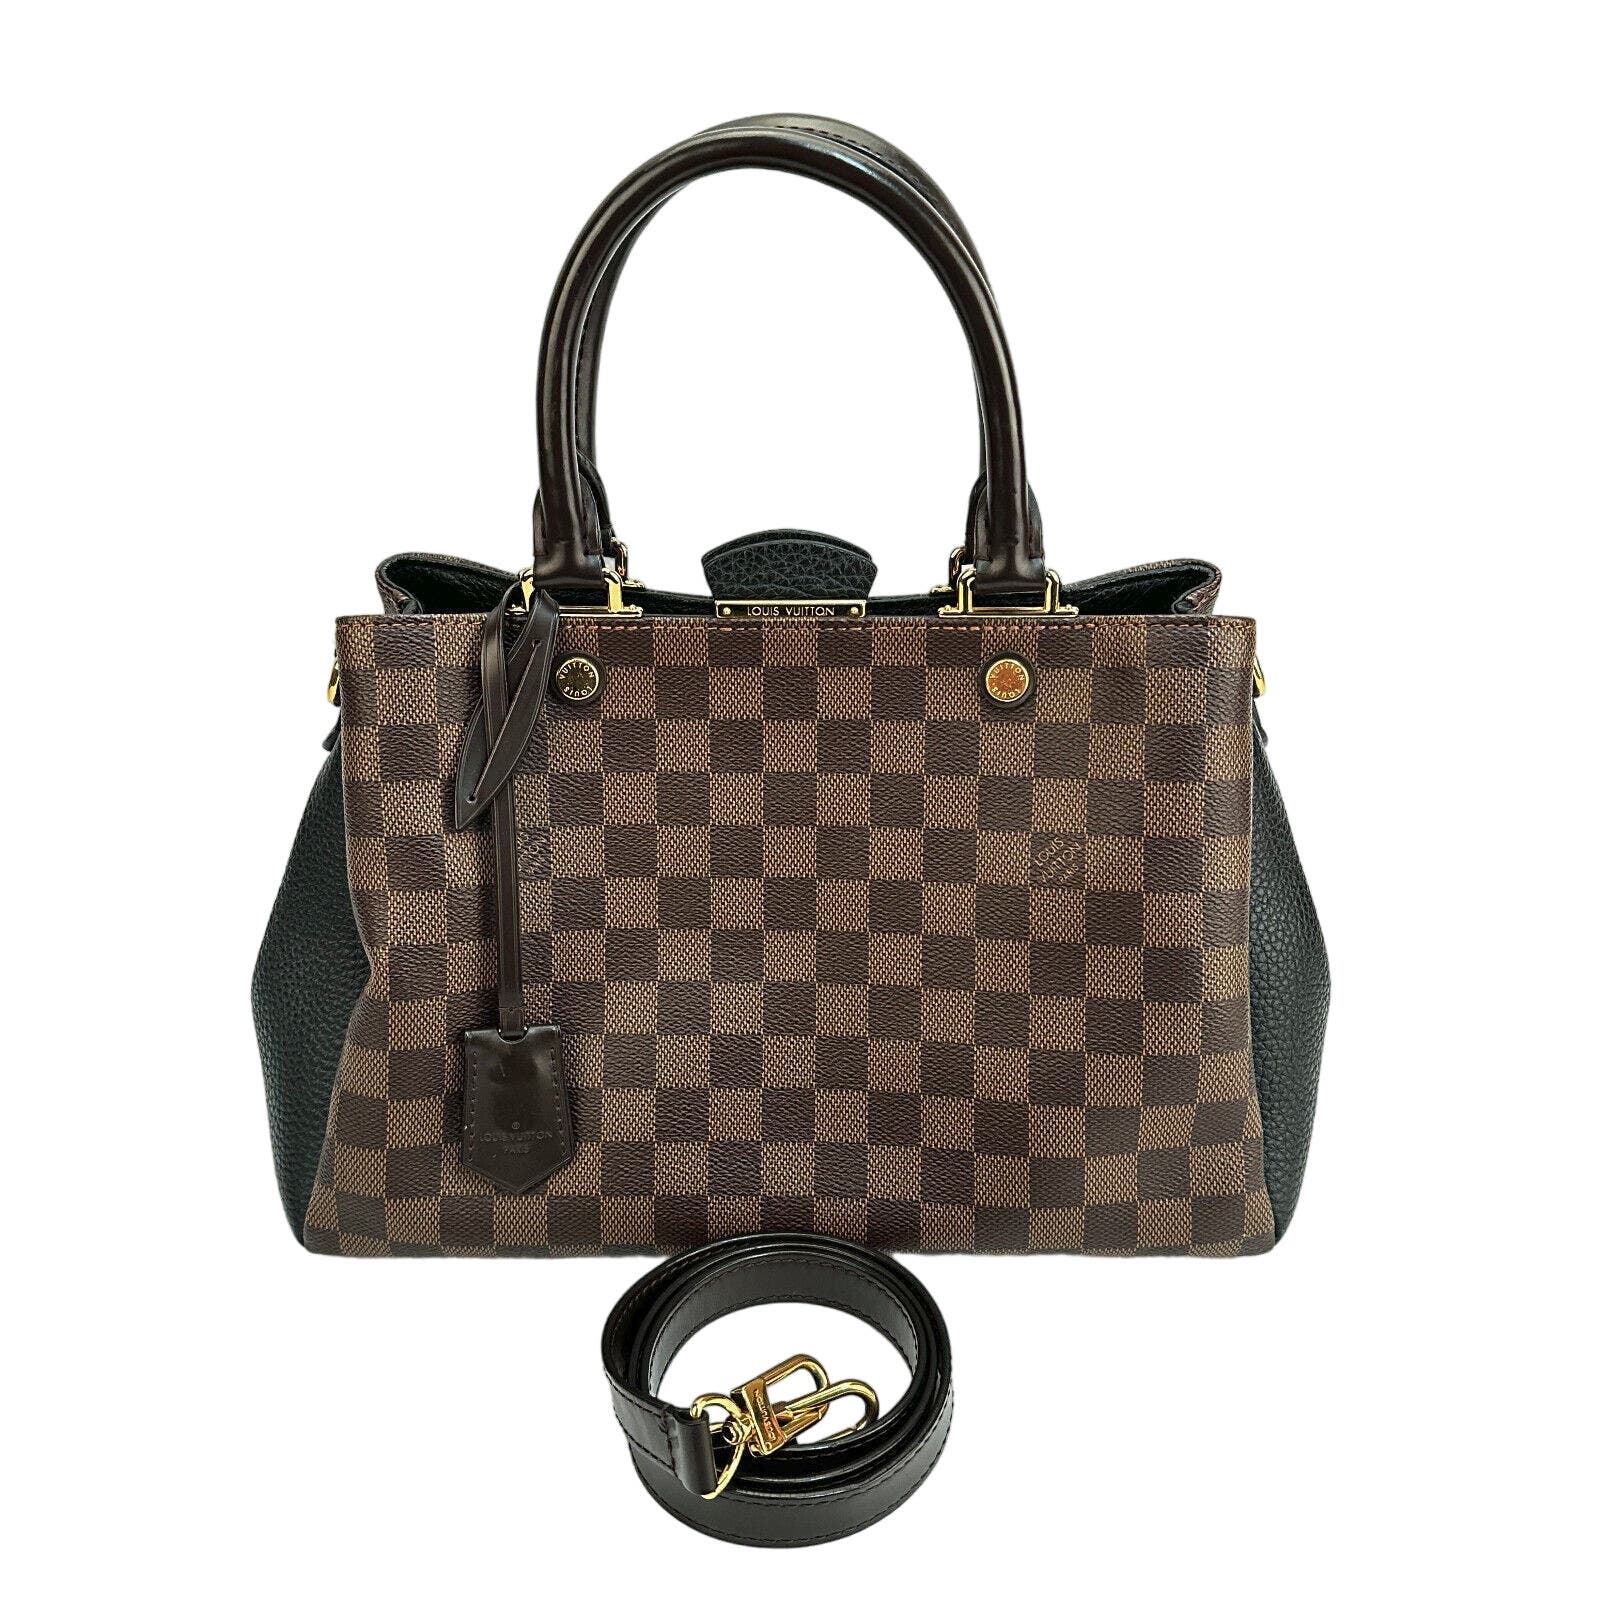 Authentic Louis Vuitton Brittany Damier Ebene Canvas Leather Bag